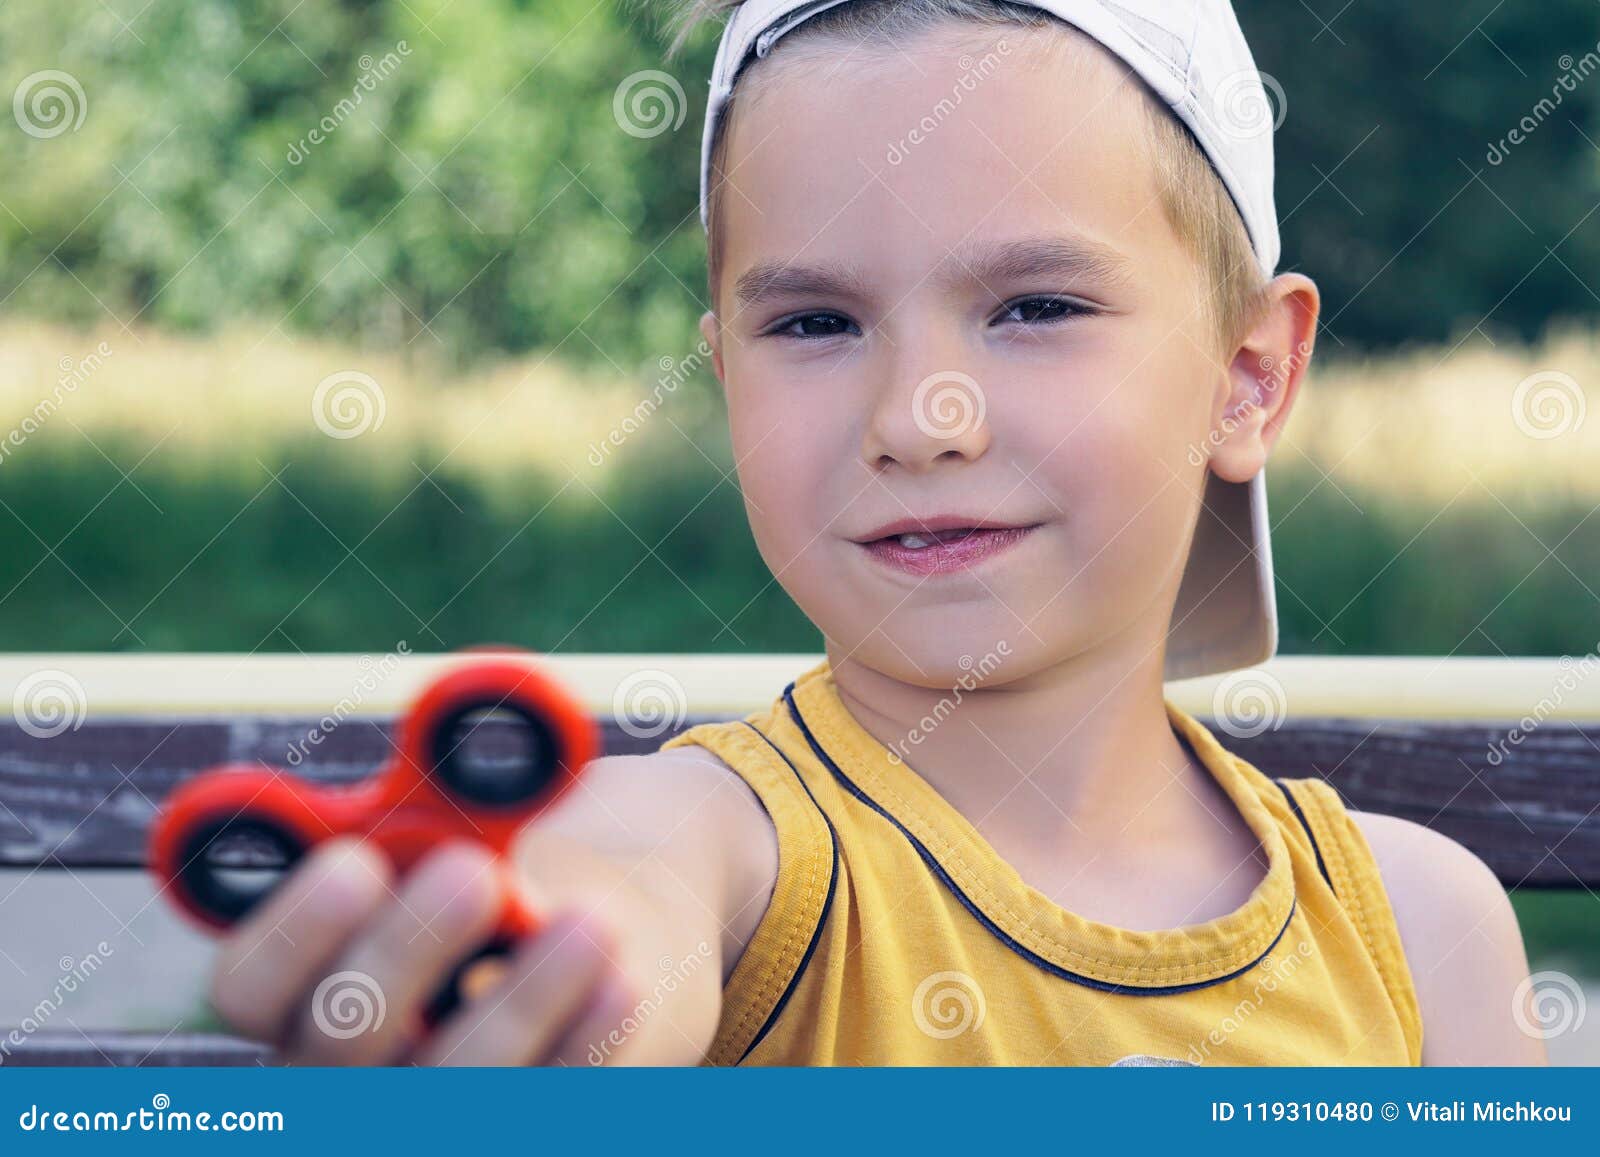 Schoolboy Holding Popular Fidget Spinner Toy Close Up Portrait